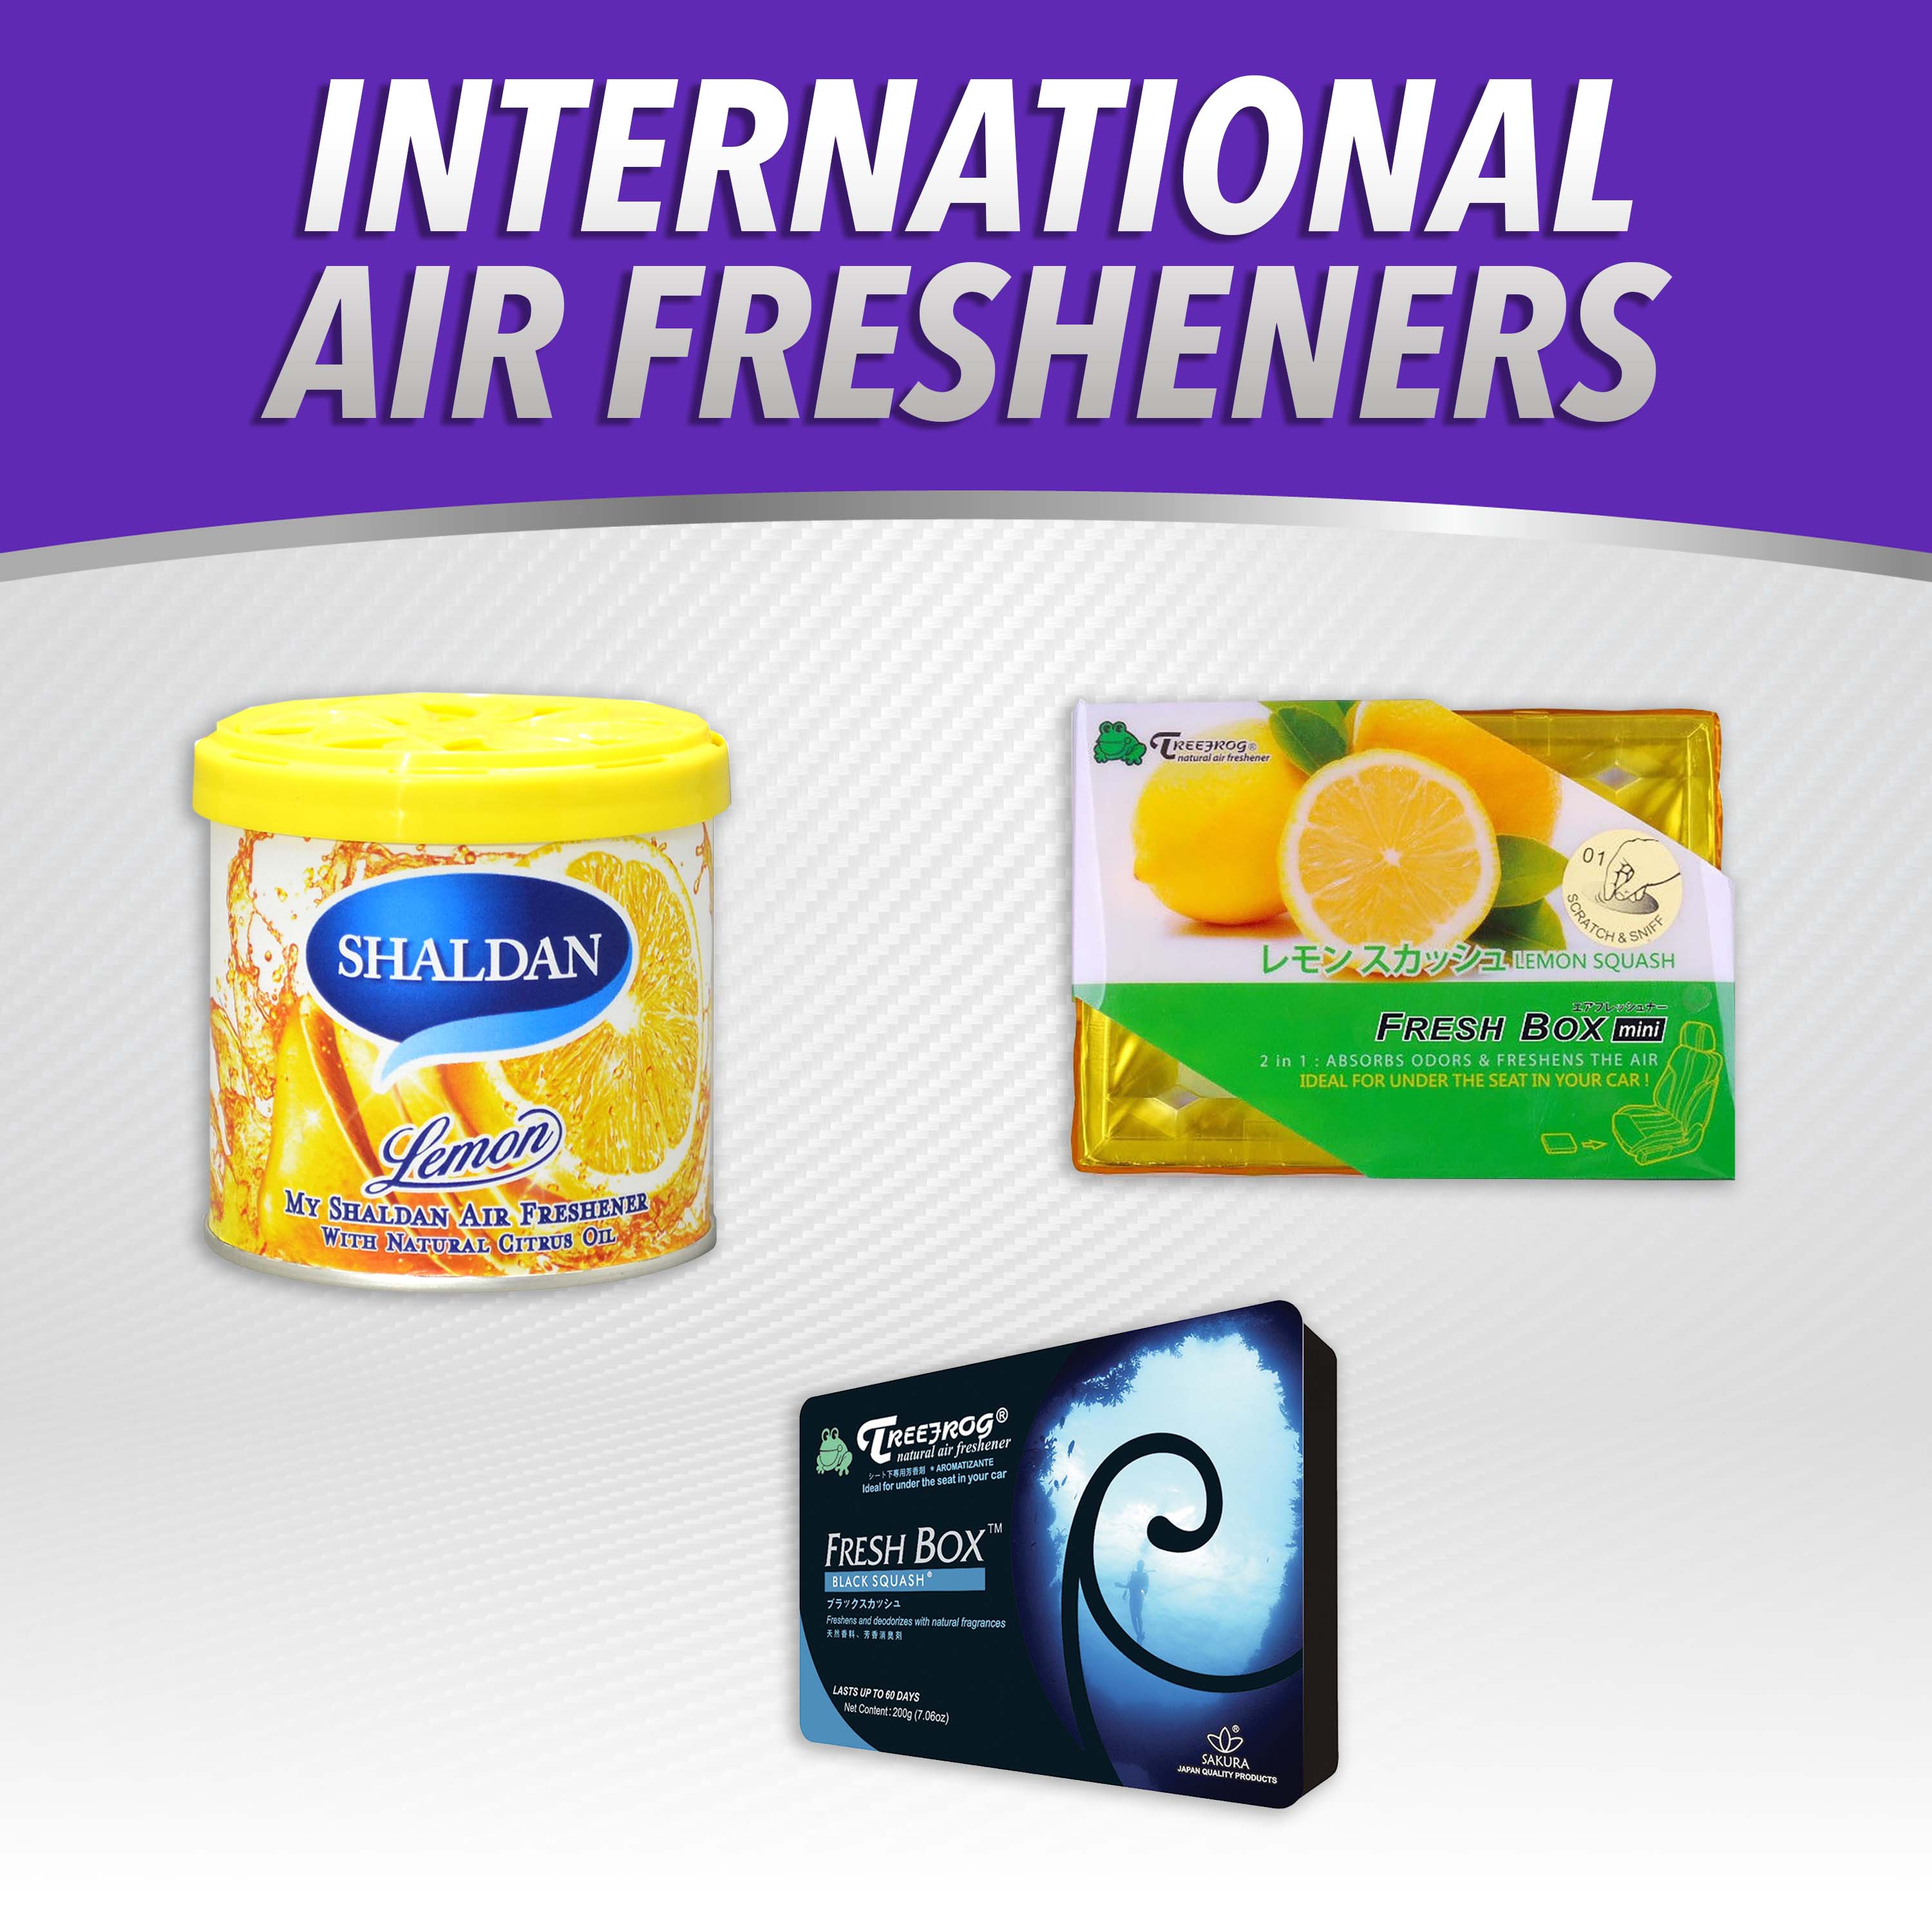 International Air Fresheners